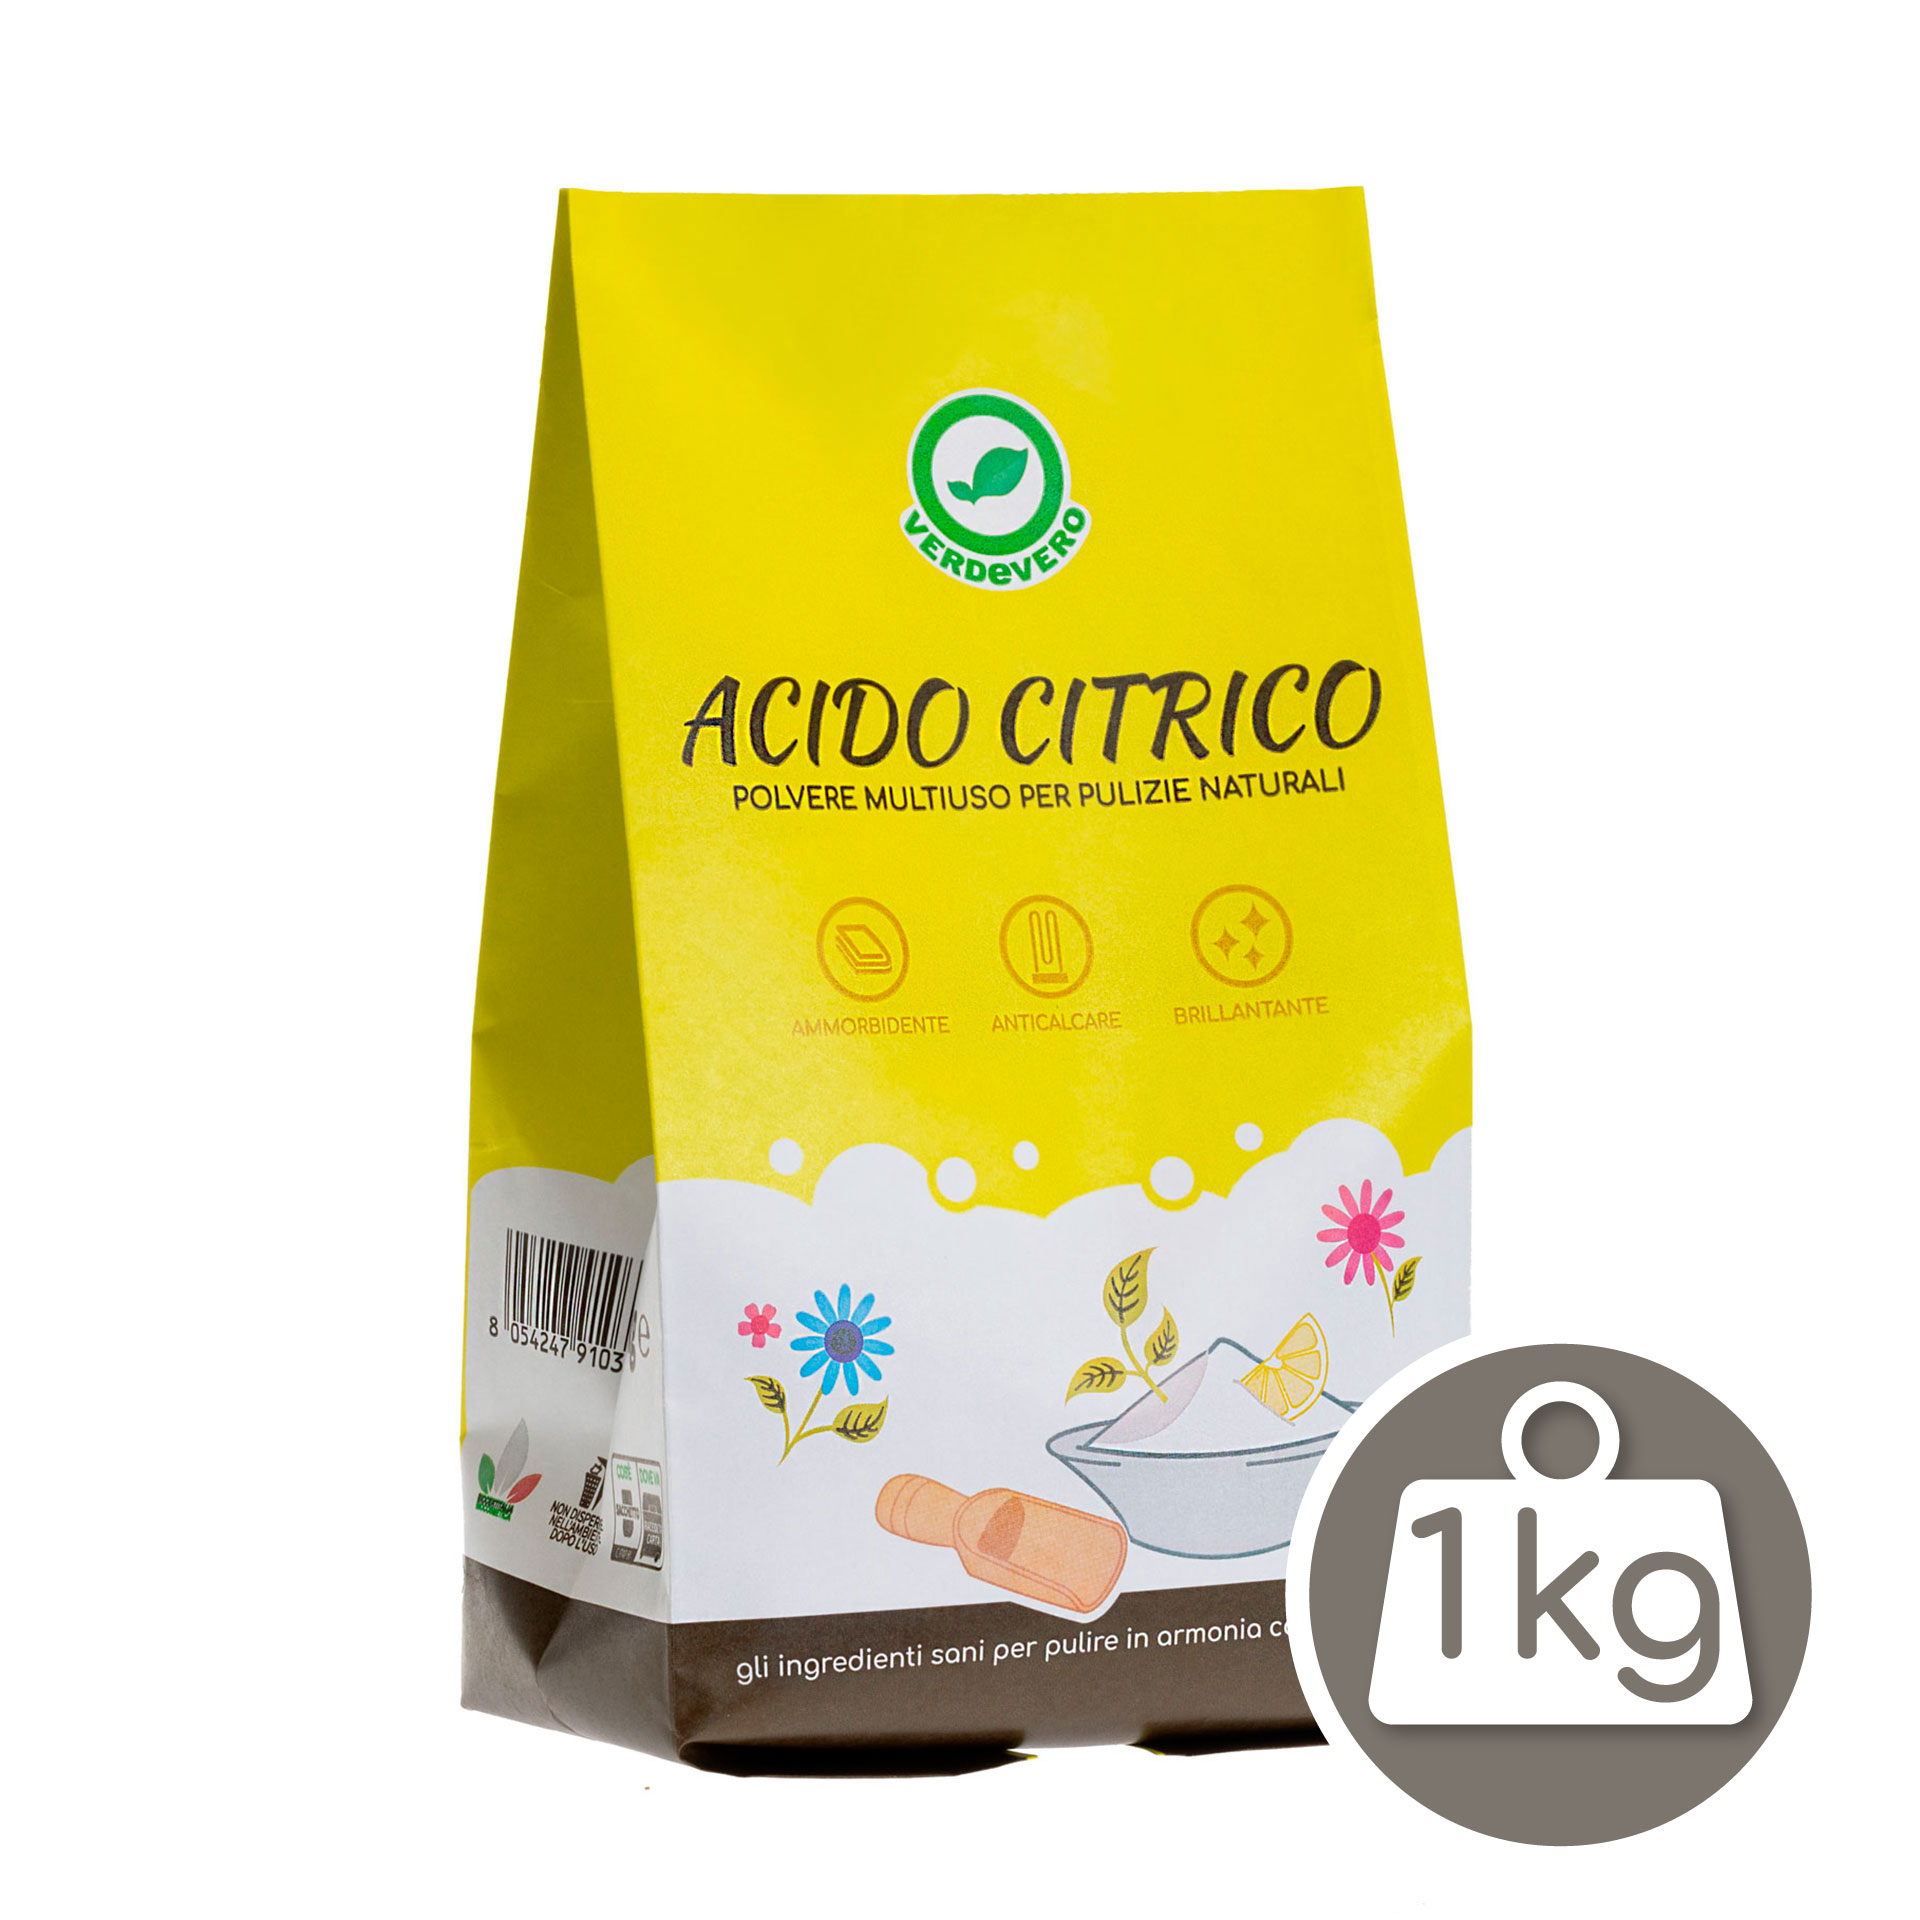 Acido Citrico 1Kg - Ingrediente naturale per detersivi fai da te